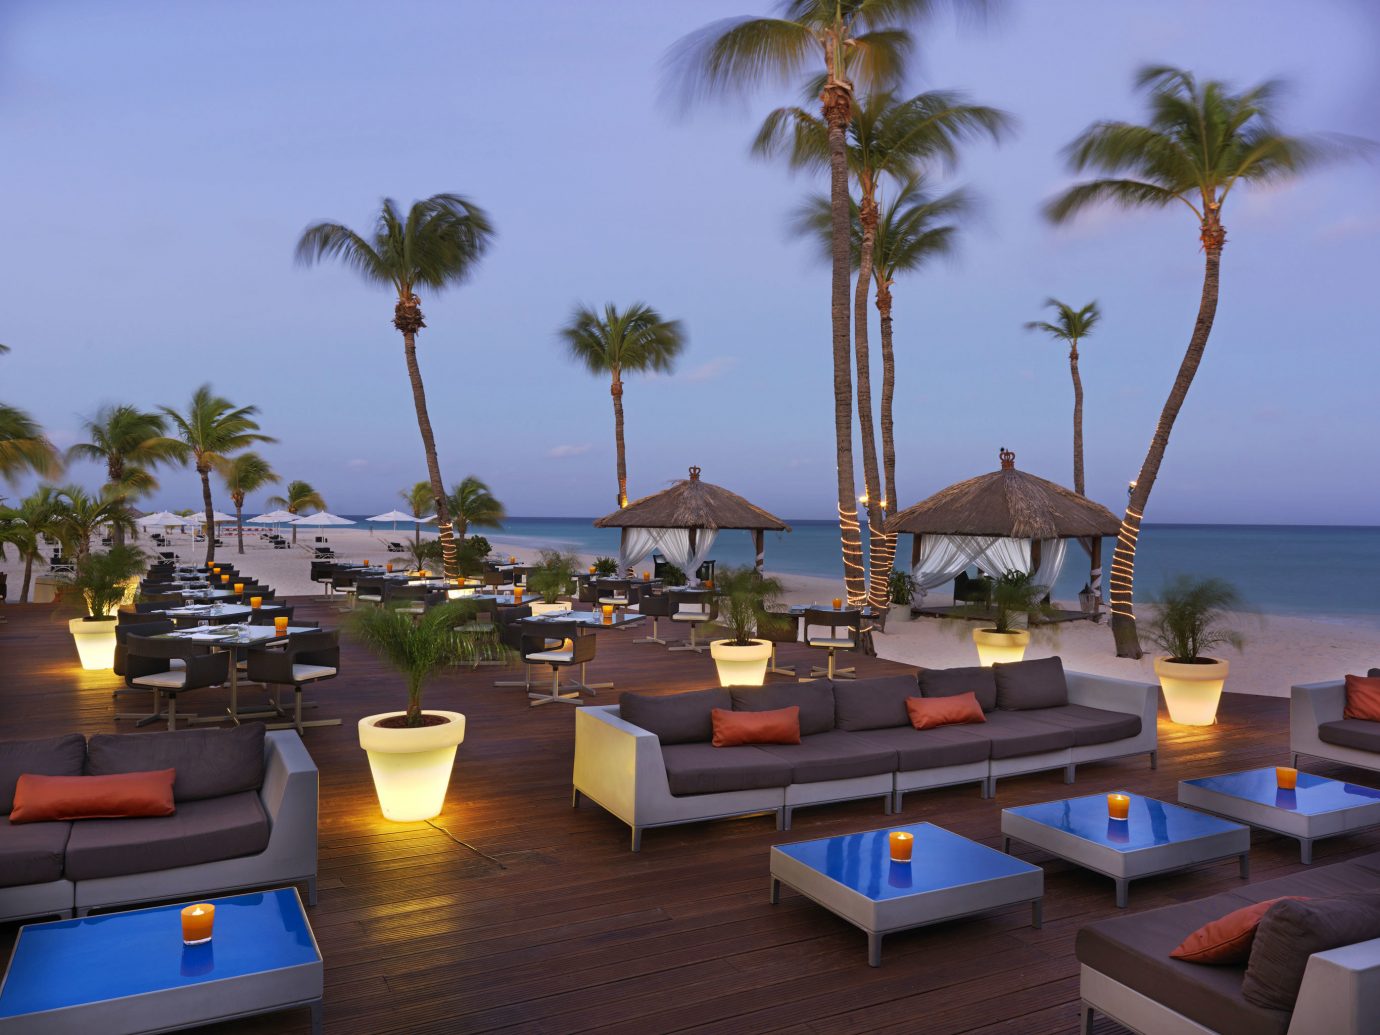 Aruba Bar Beachfront Dining Drink Eat Hotels Tropical tree sky Resort vacation palm estate arecales Beach caribbean condominium Villa Sea furniture plant